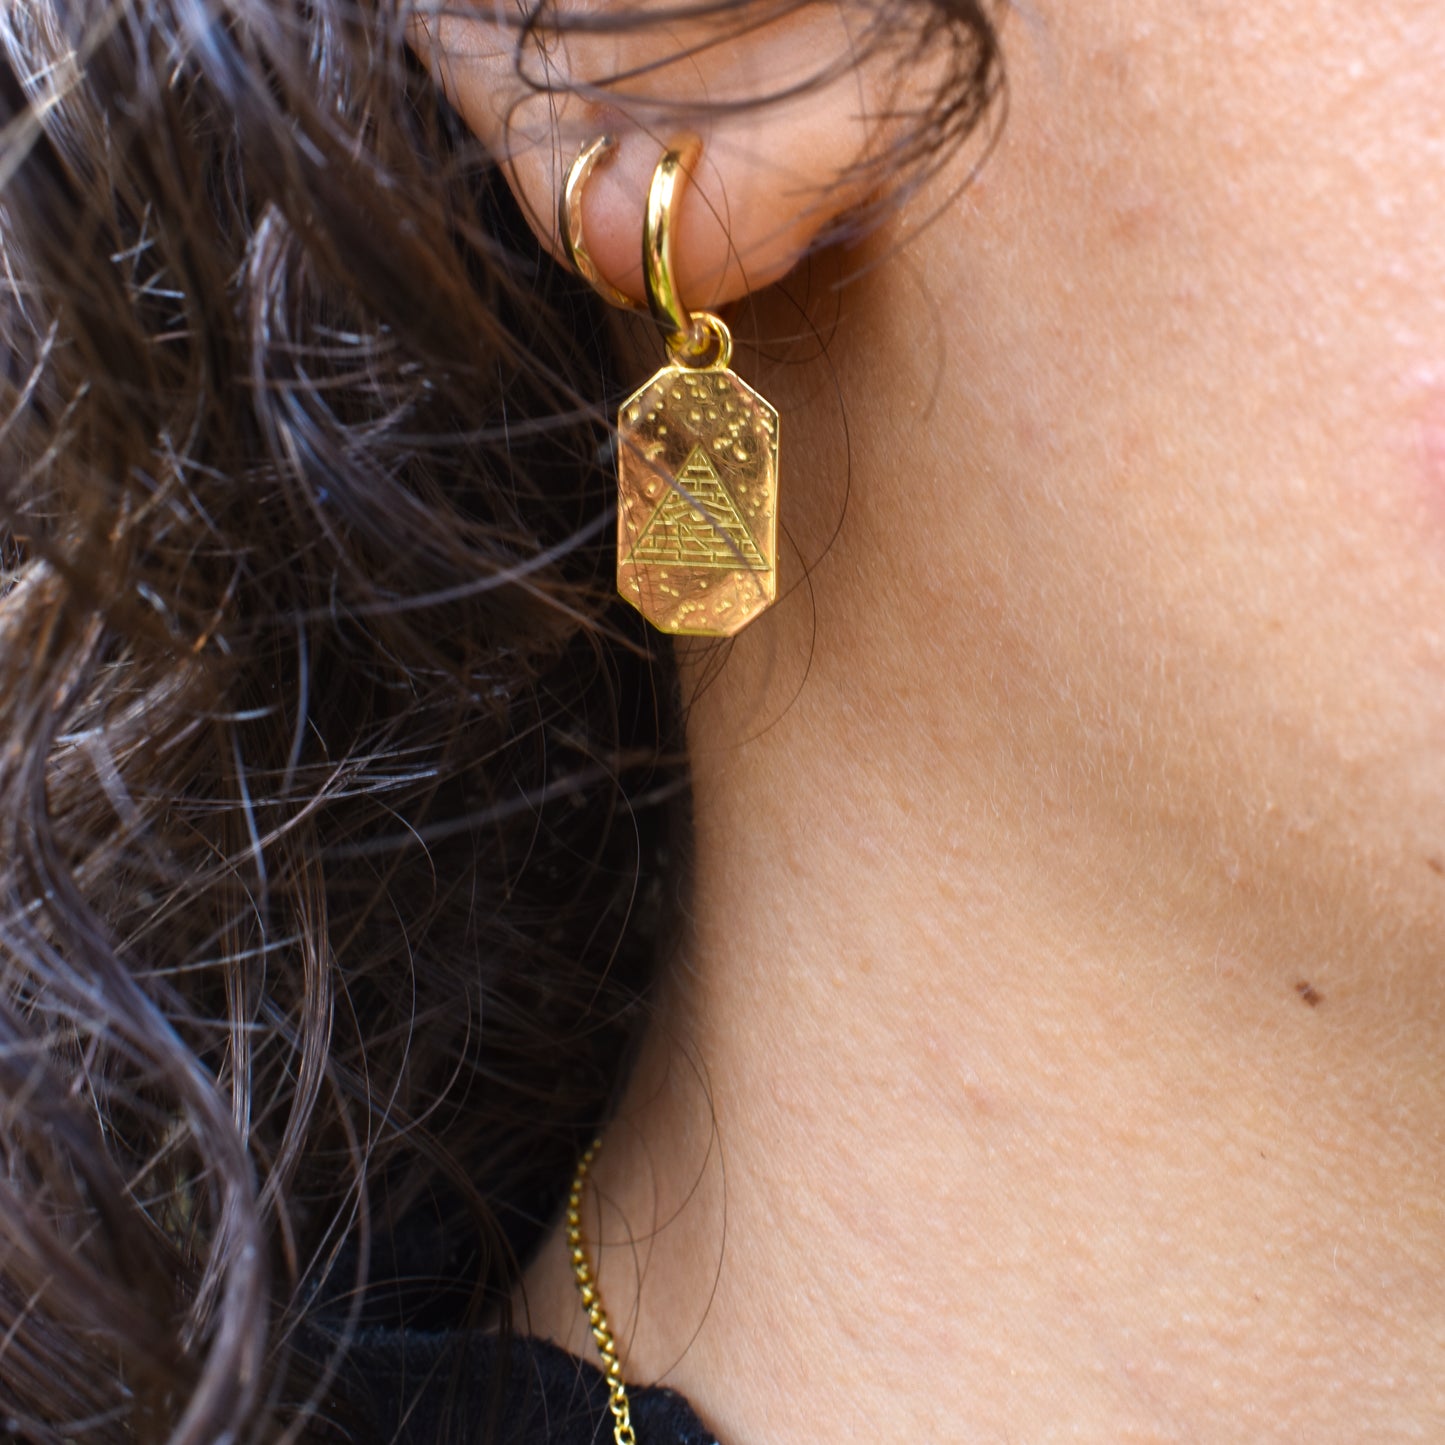 Woman wearing Ra / Horus earrings.